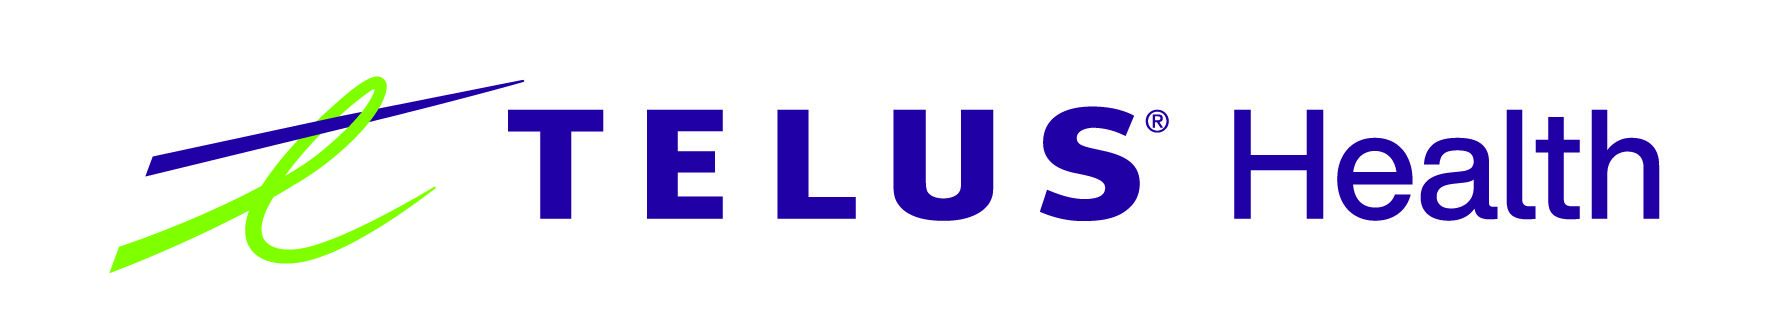 telus-health-logo-and-link